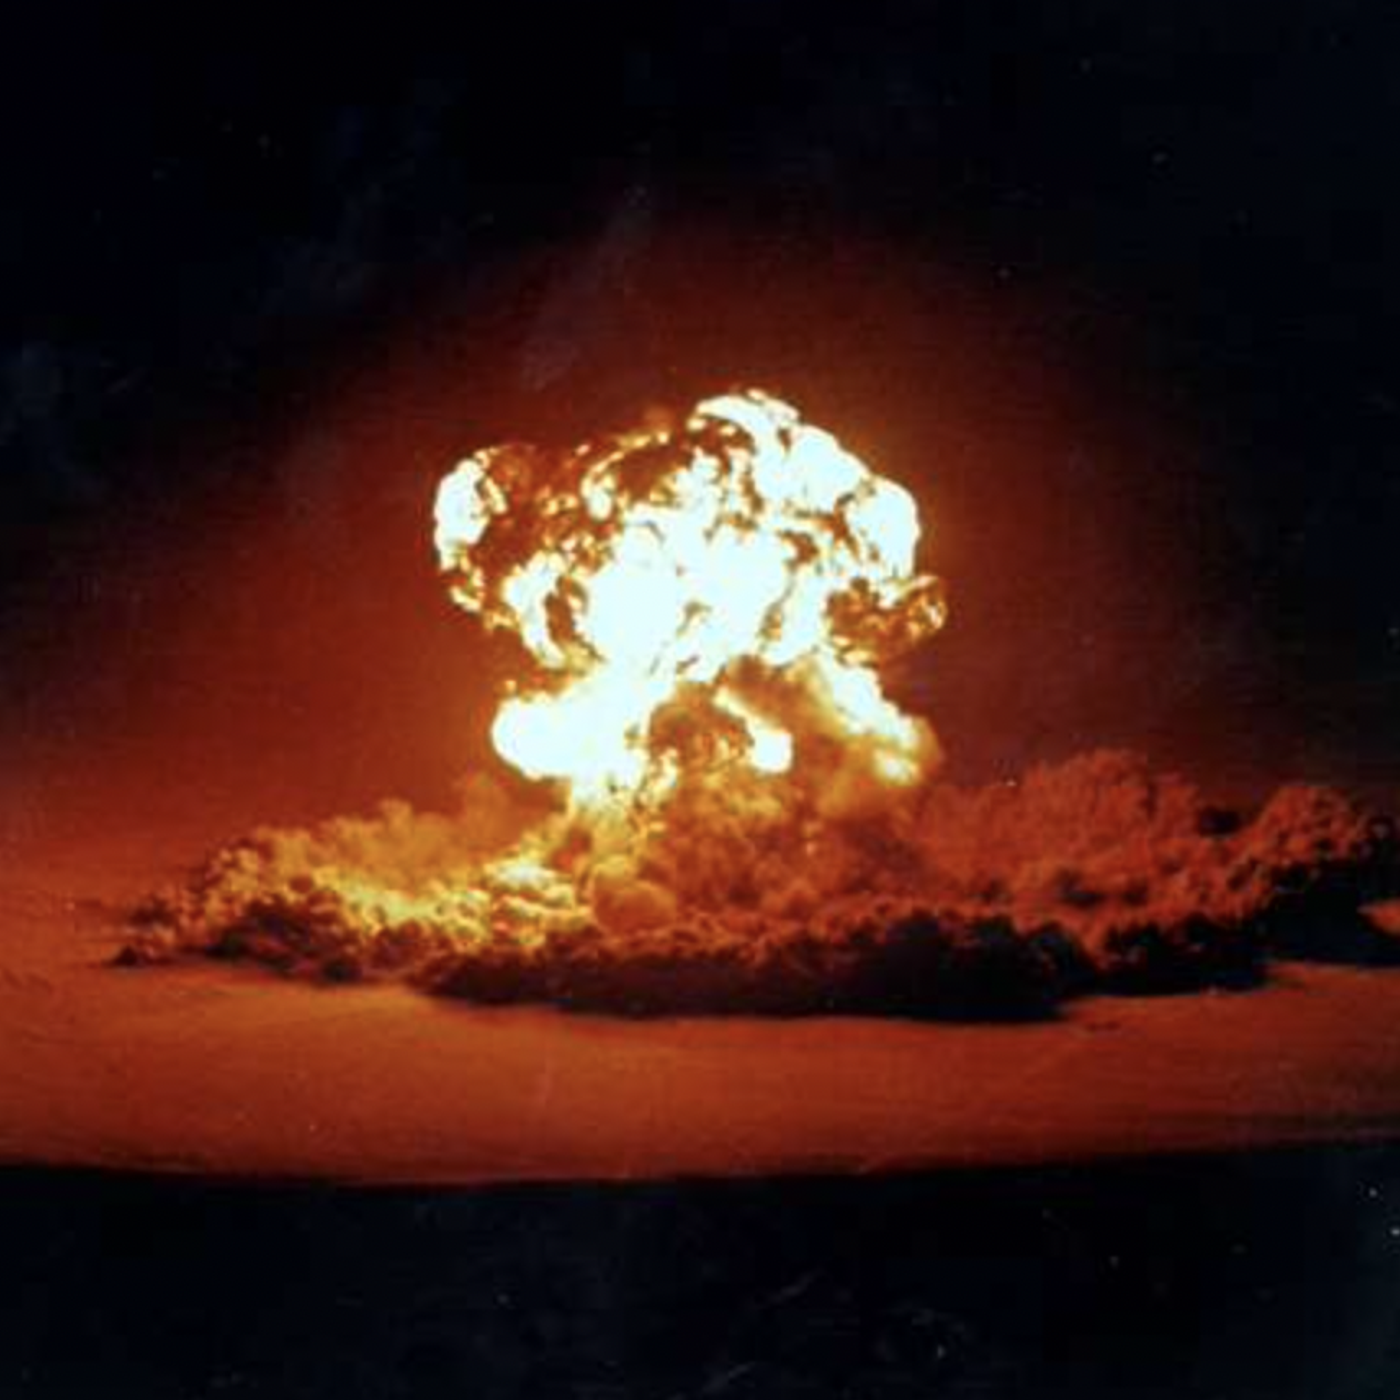 #NUKES: Russia vetoes banning nukes in orbit. Henry Sokolski, NPEC